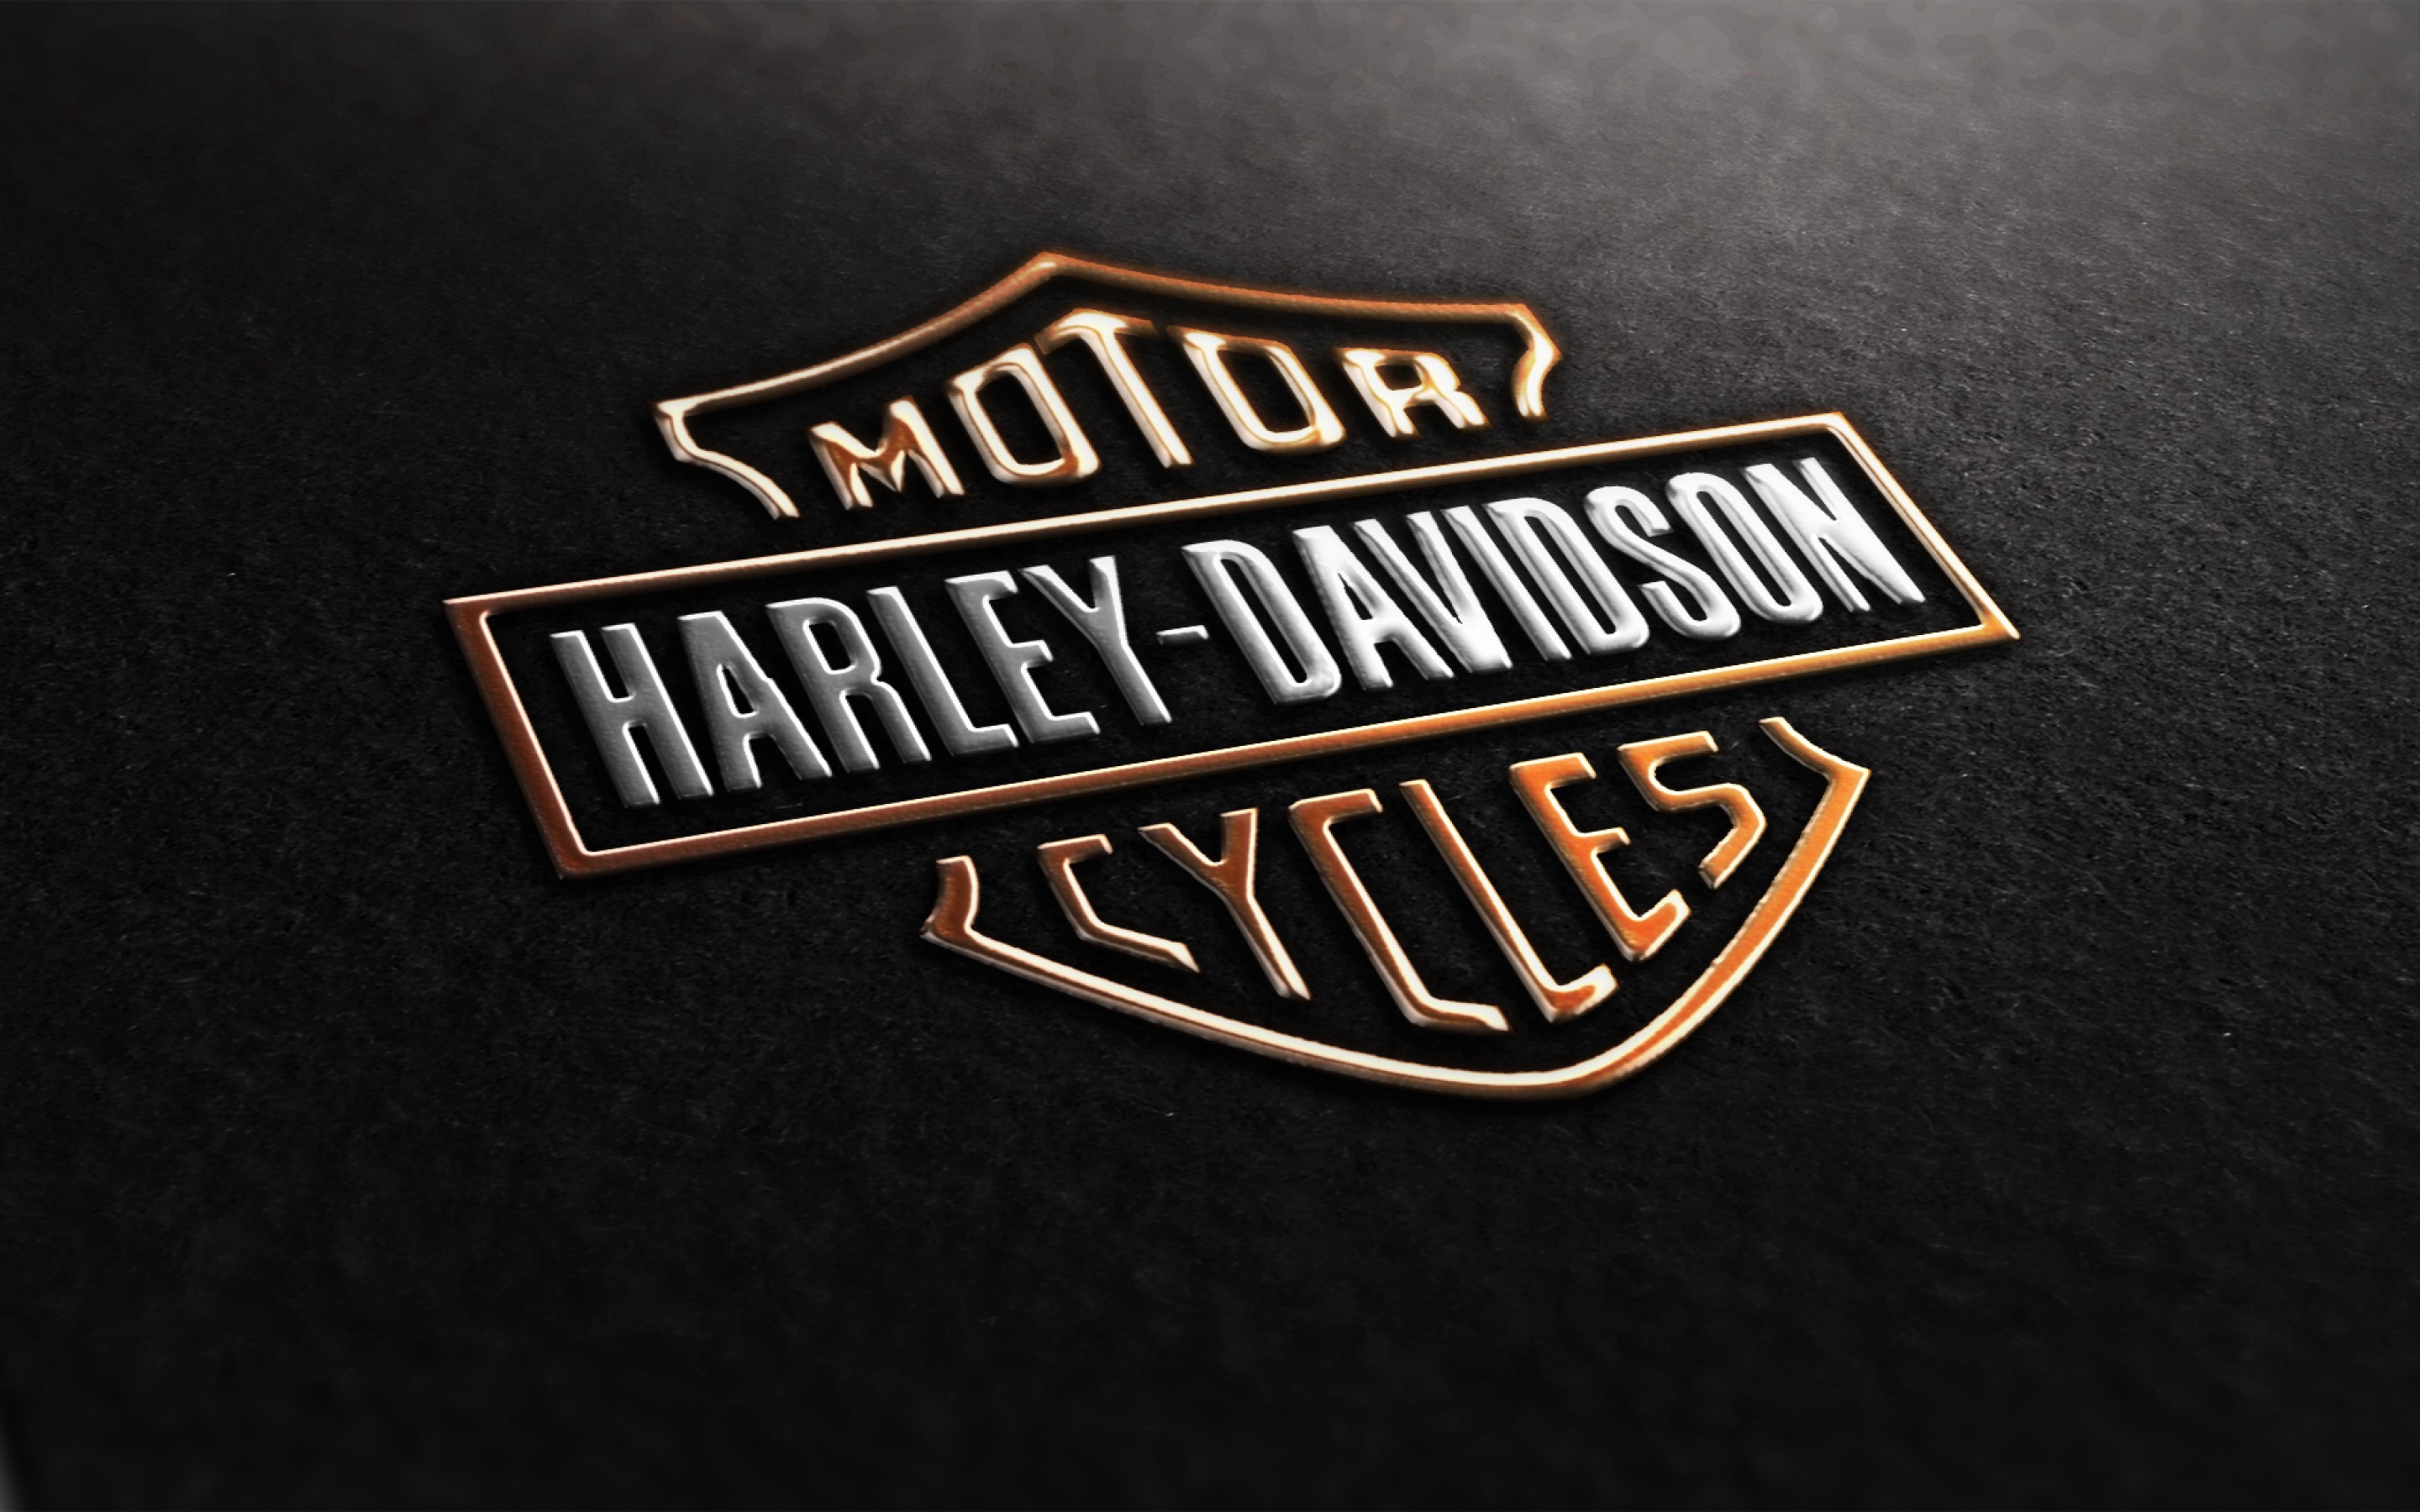 Harley Davidson Wallpaper Best Cars